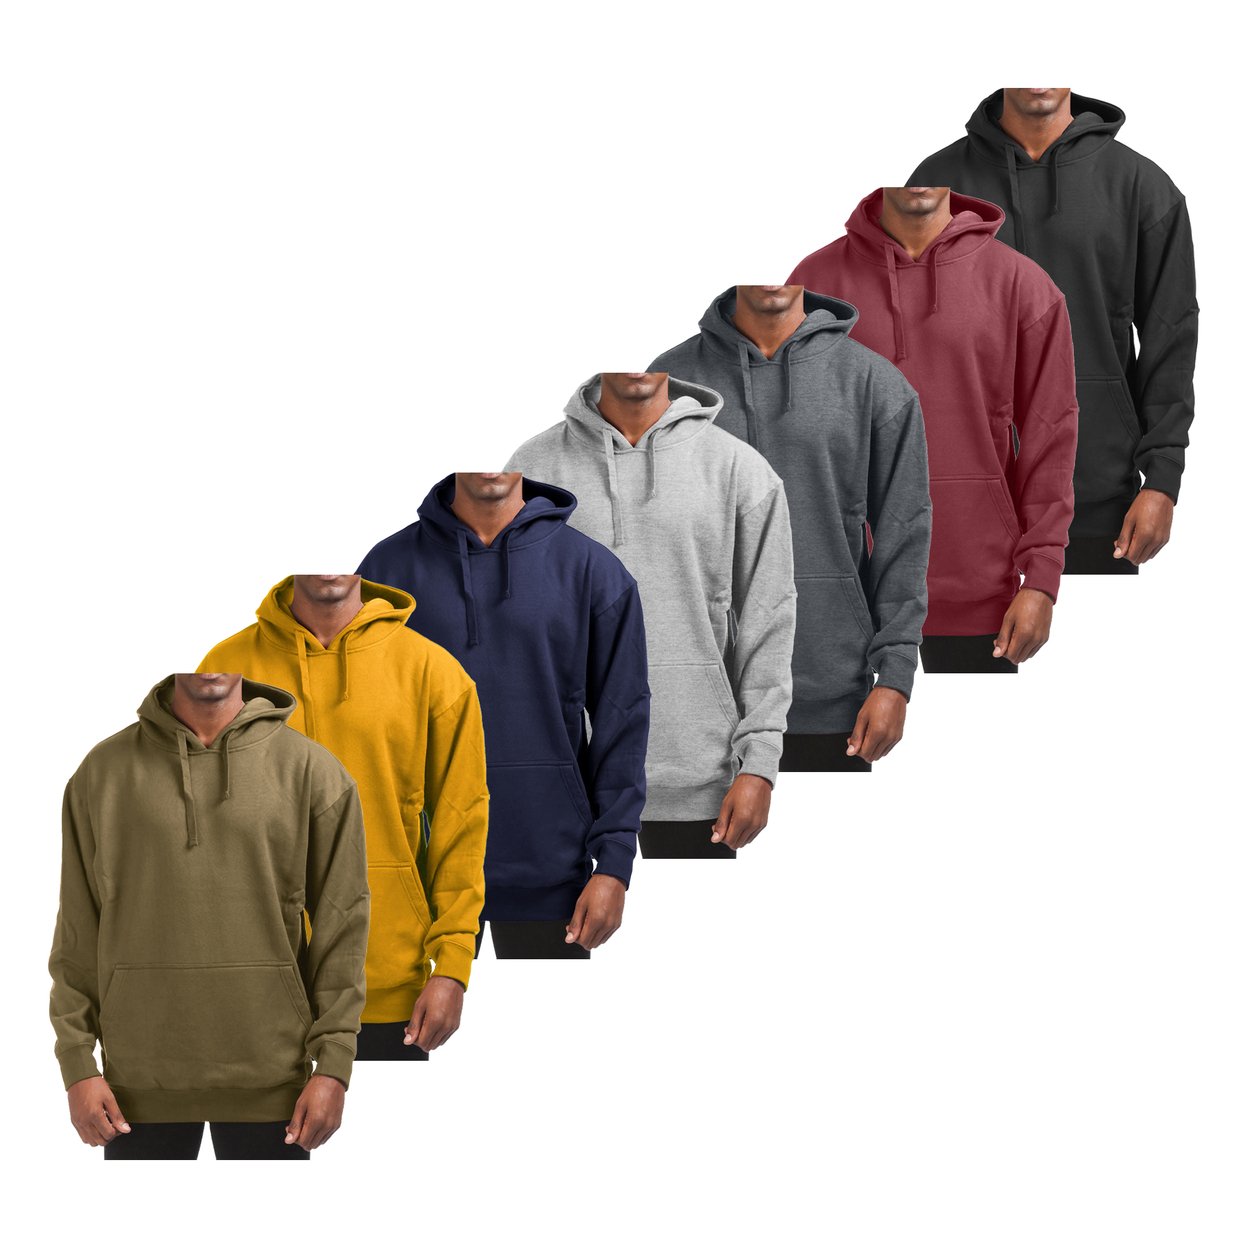 2-Pack: Men's Super-Soft Winter Warm Cotton-Blend Fleece Pullover Hoodie With Kangaroo Pocket - Black & Navy, Large